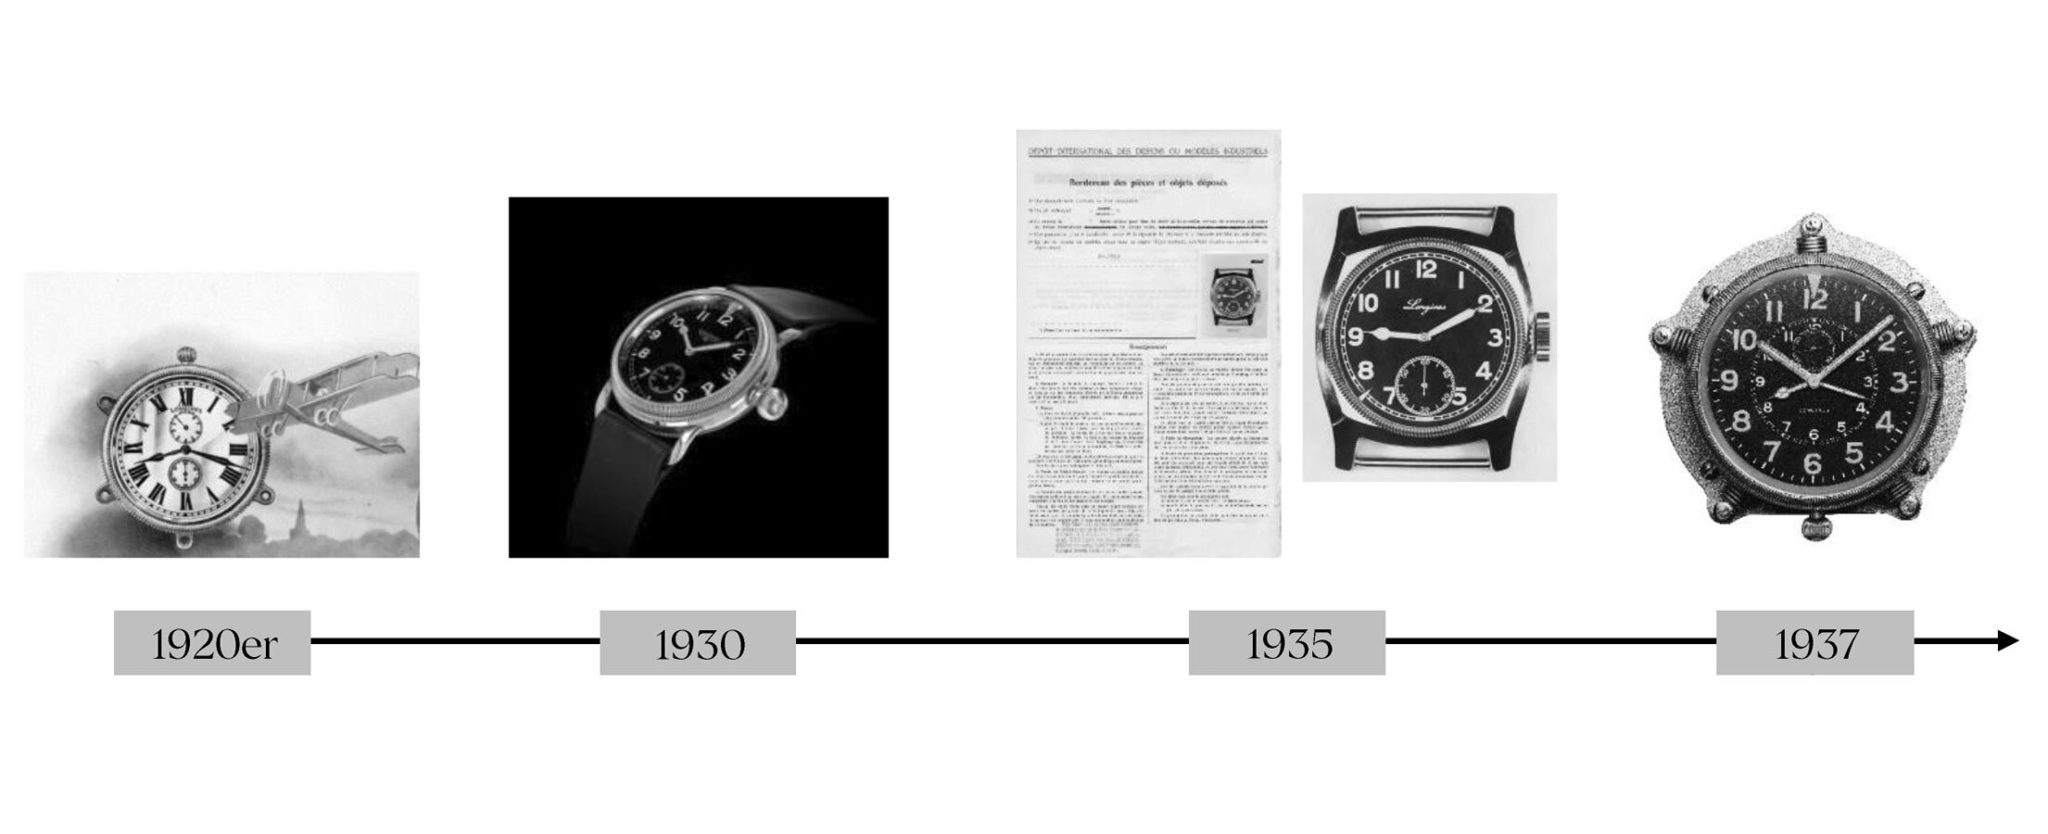 Longines-historical-timeline-Pilot-Majetek-from-1920-to-1937-timeline